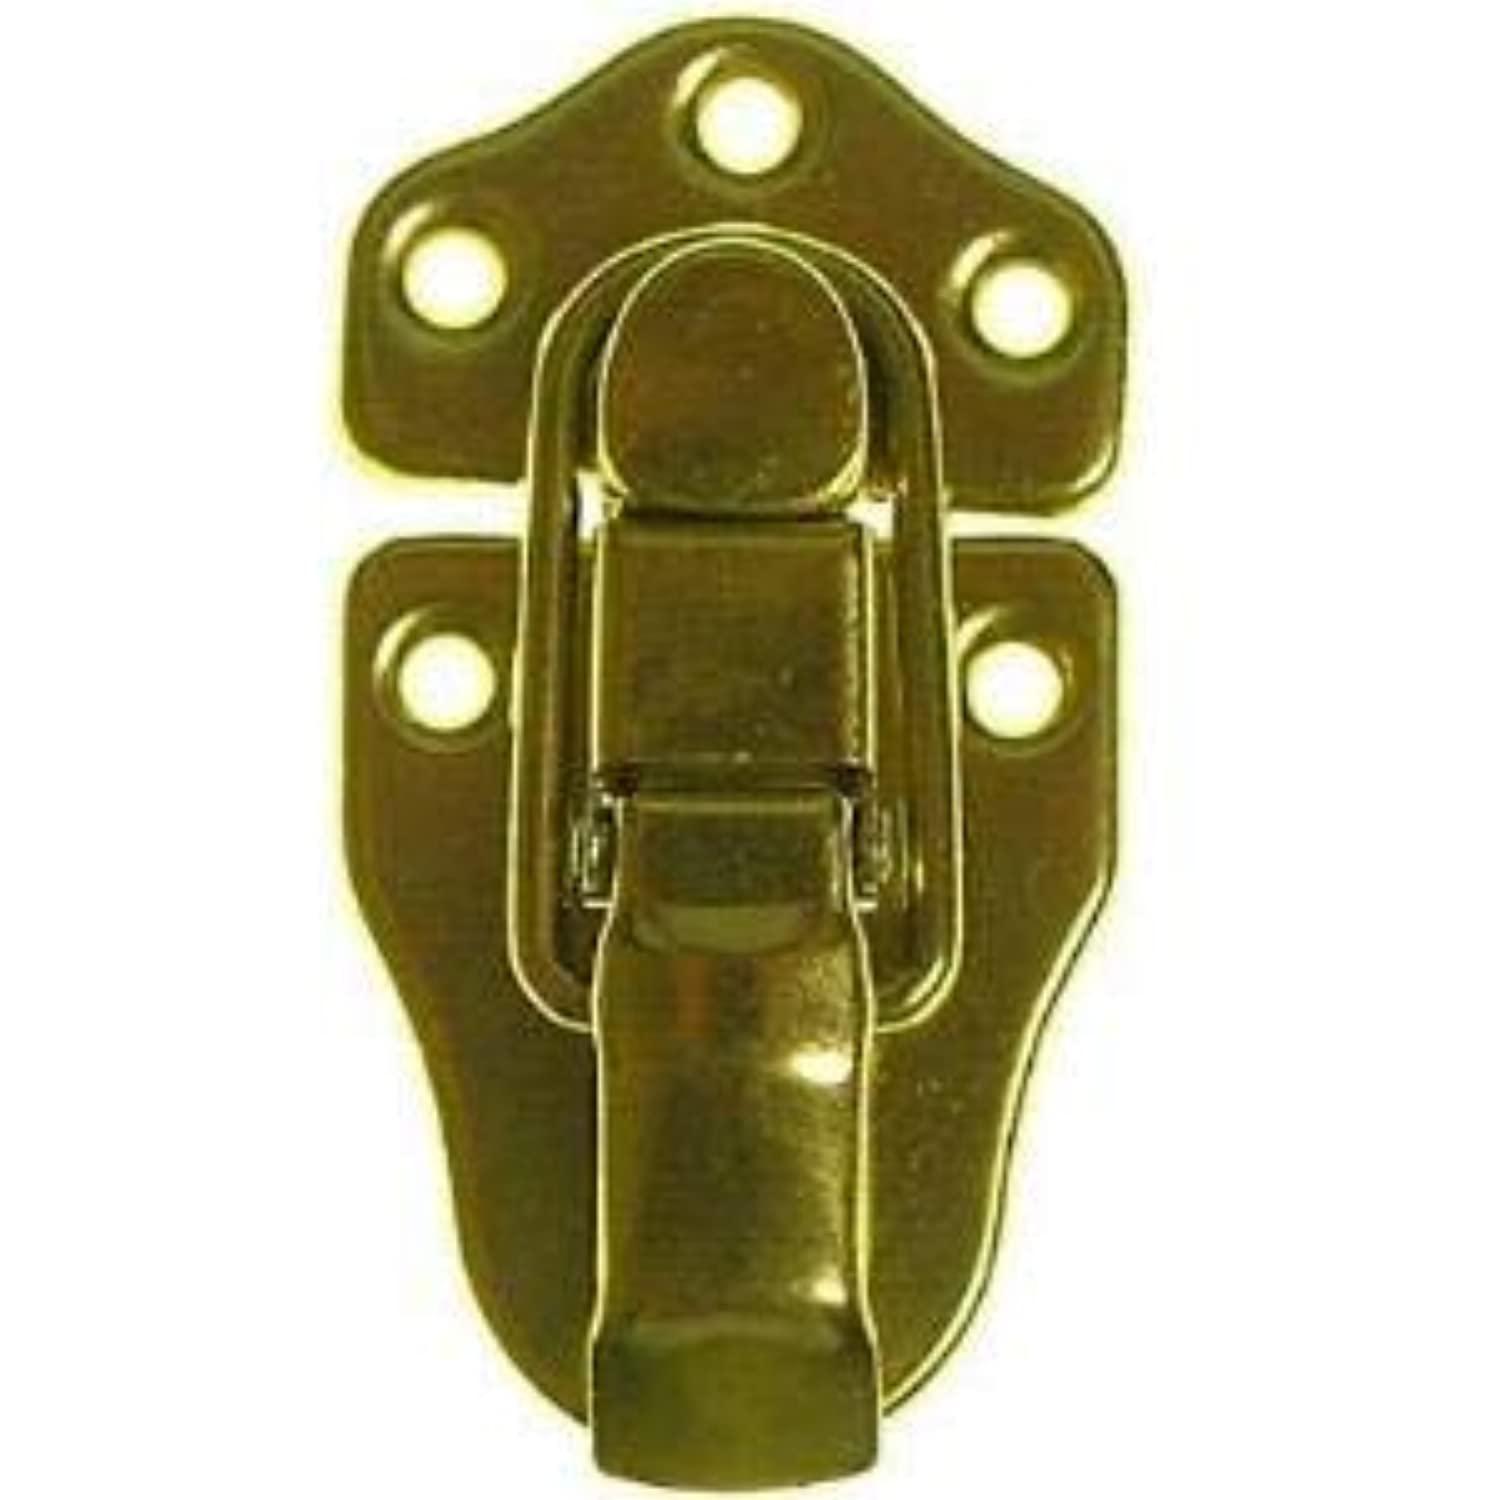 UNIQANTIQ HARDWARE SUPPLY brass finish medium toggle trunk drawbolt closure clasp latch | lock for chest suitcase, jewelry box | hardware for furniture